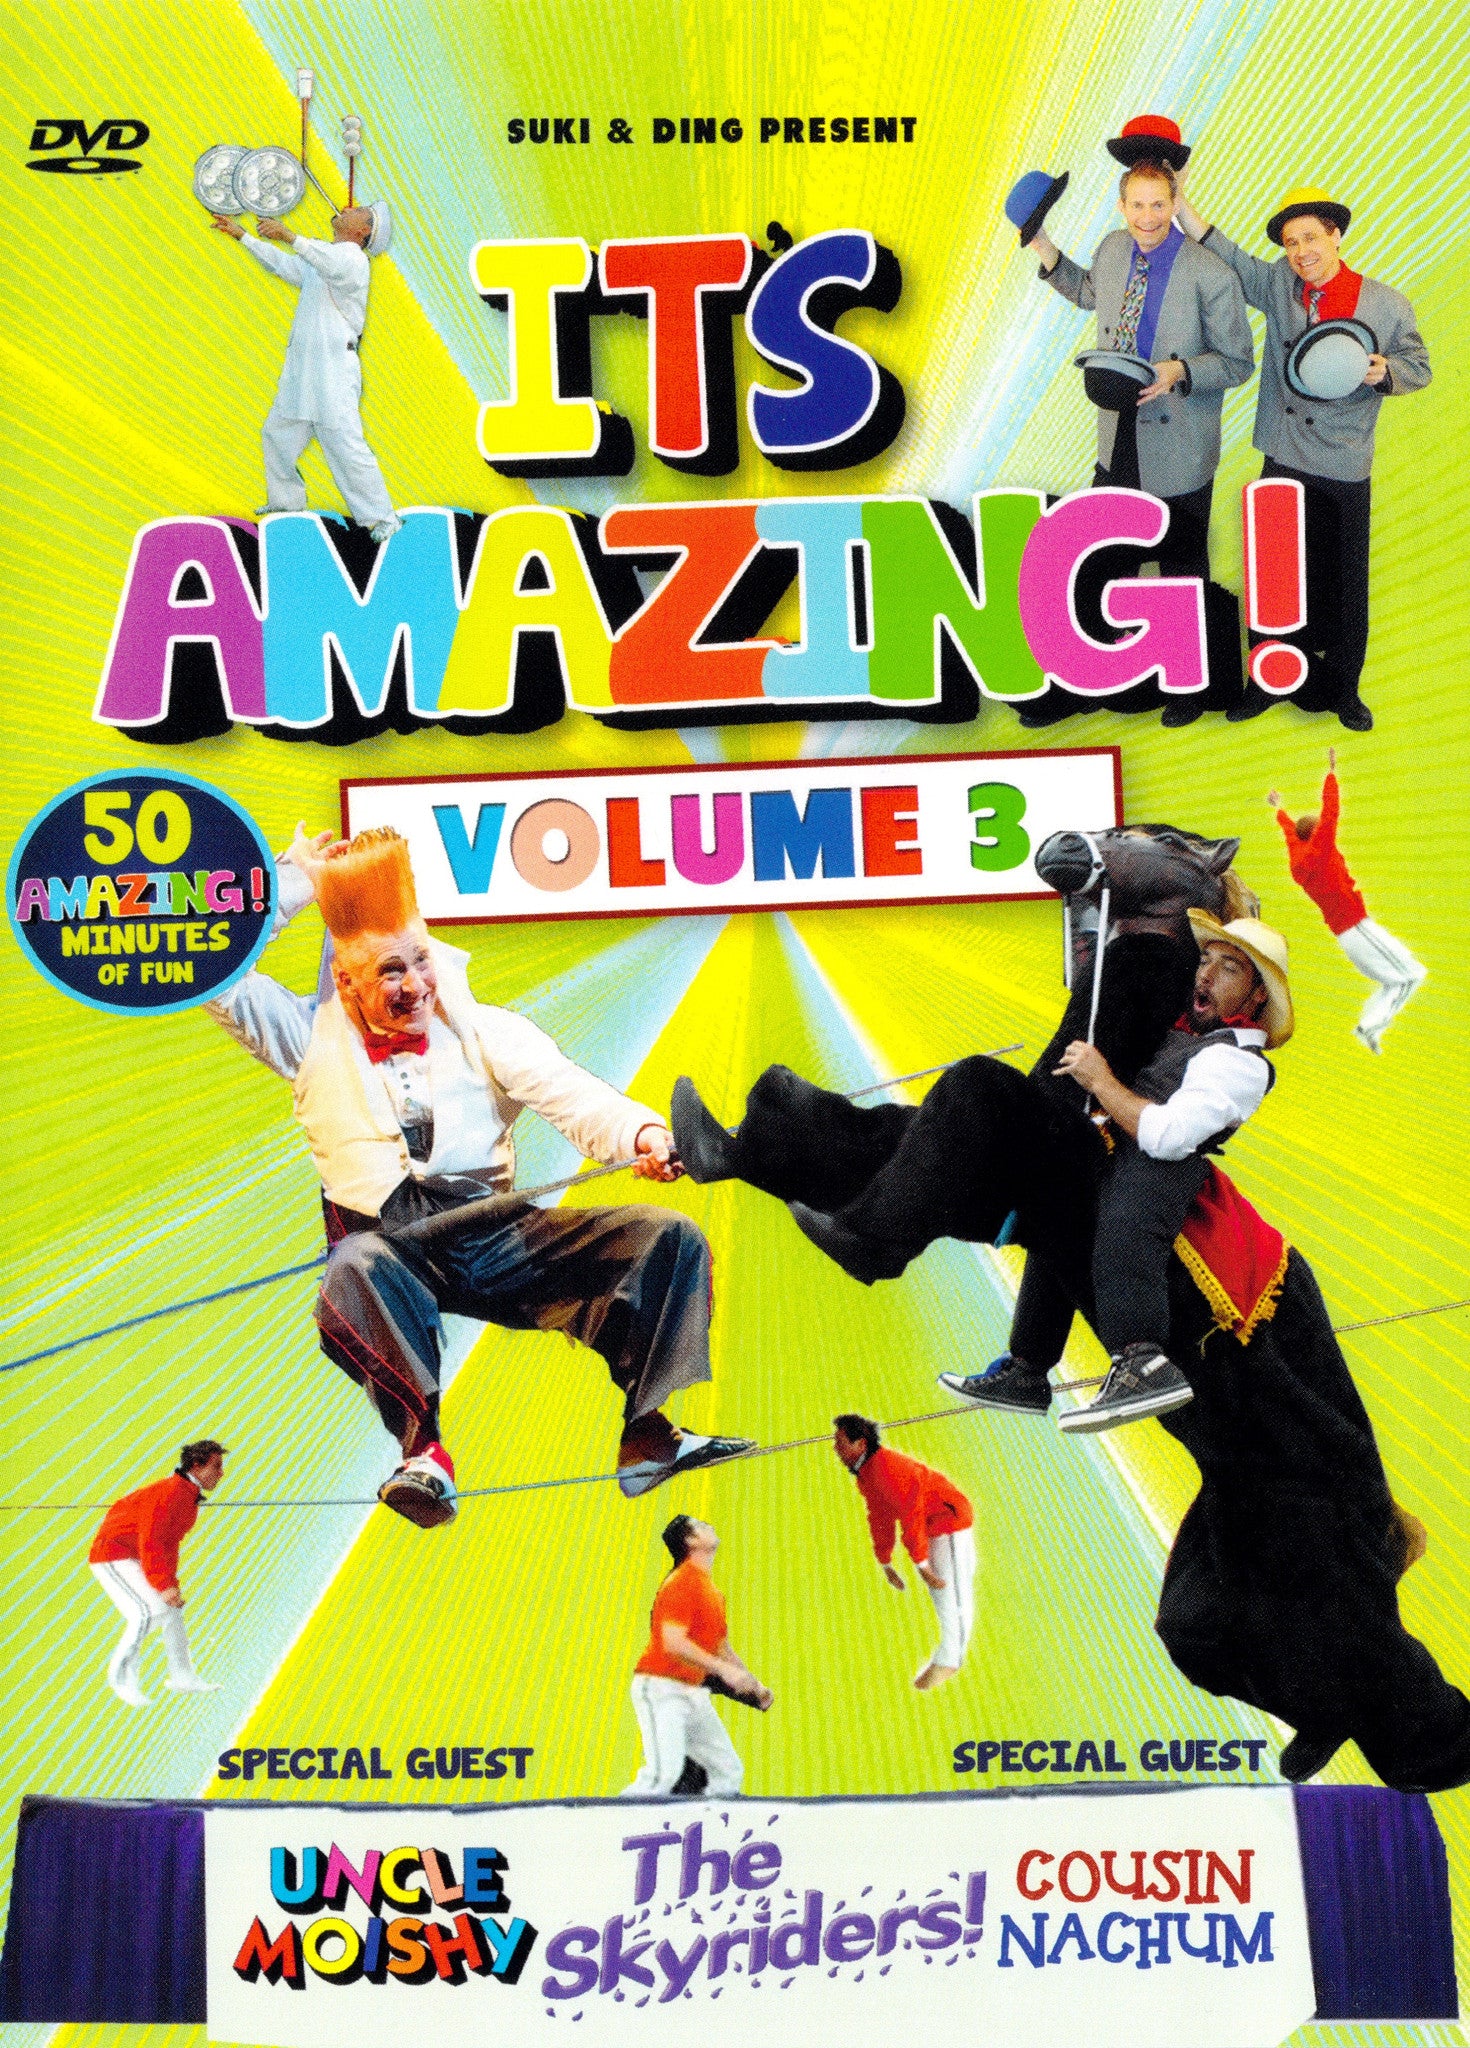 It's Amazing Vol 3 - DVD